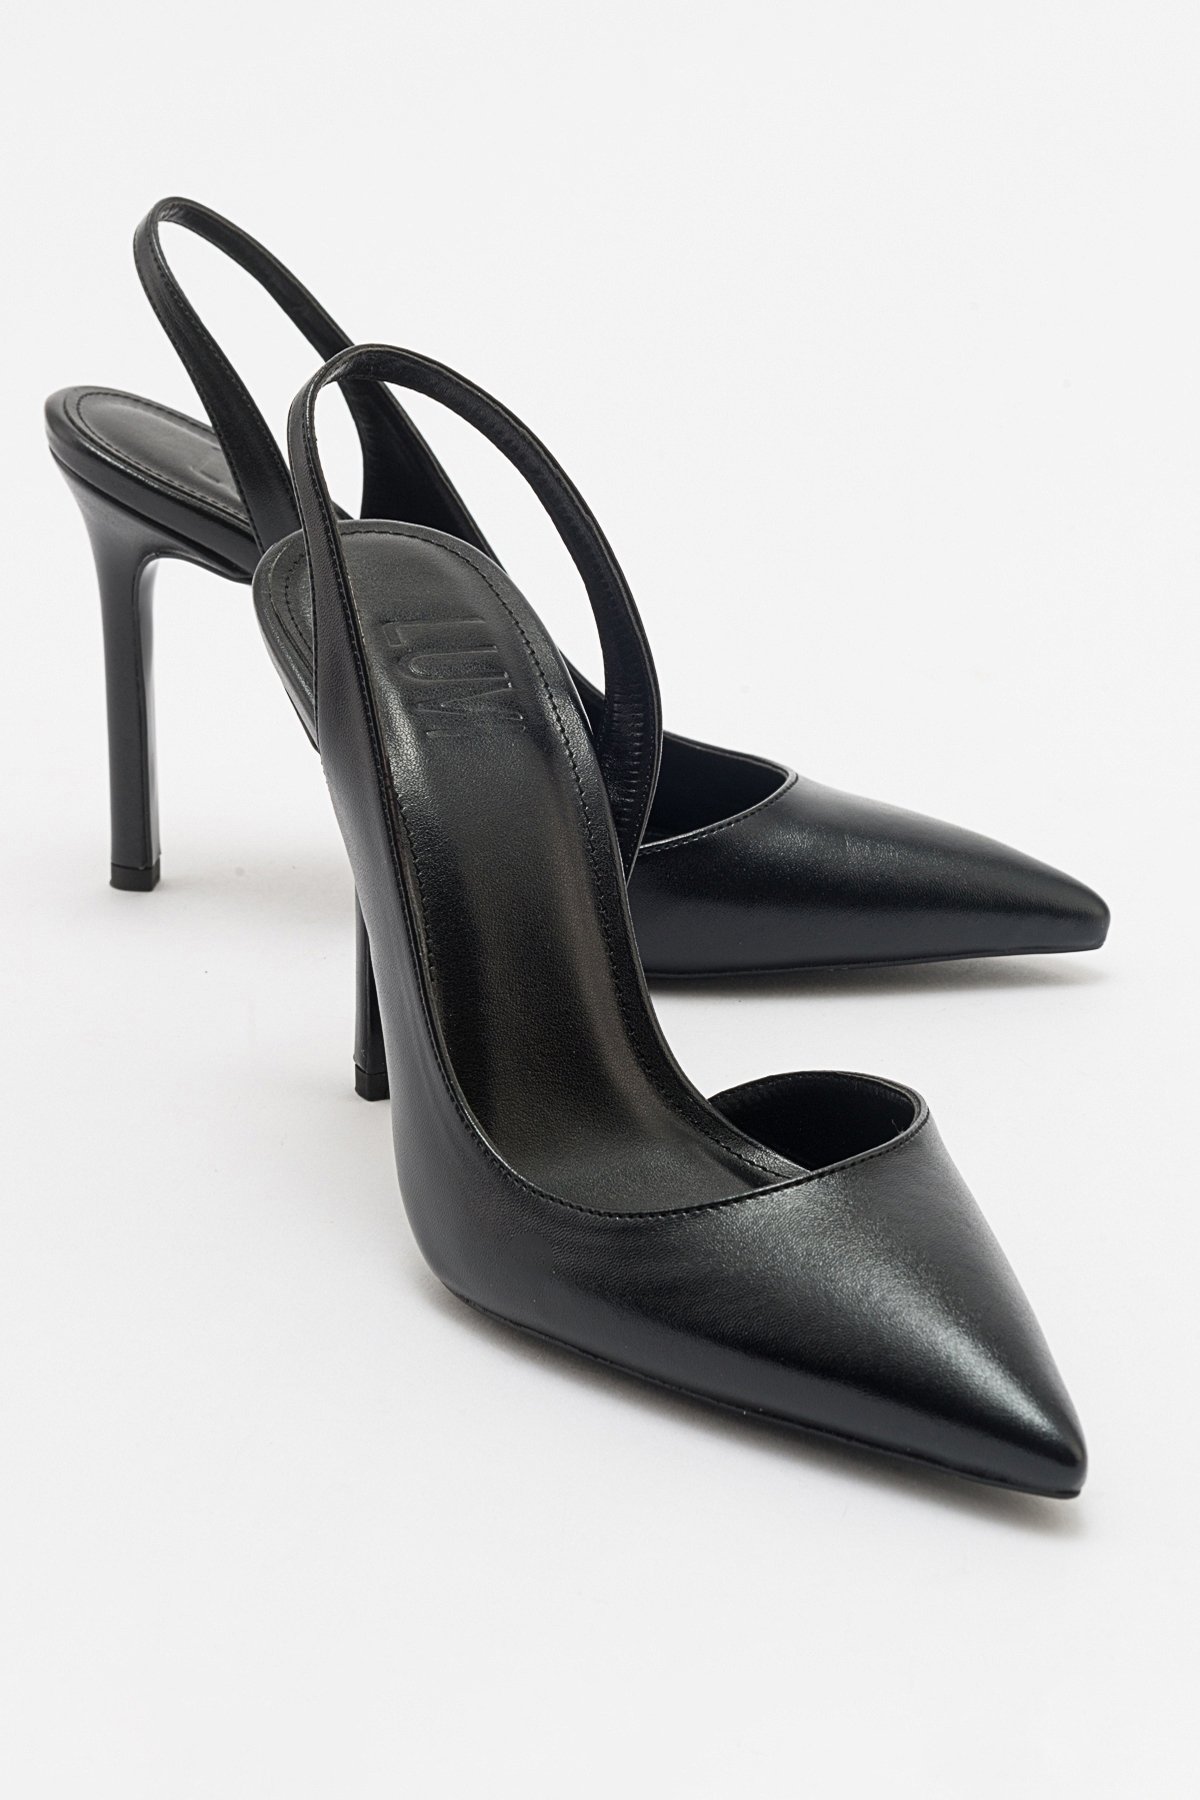 LuviShoes TWINE Women's Black Skin Heeled Shoes